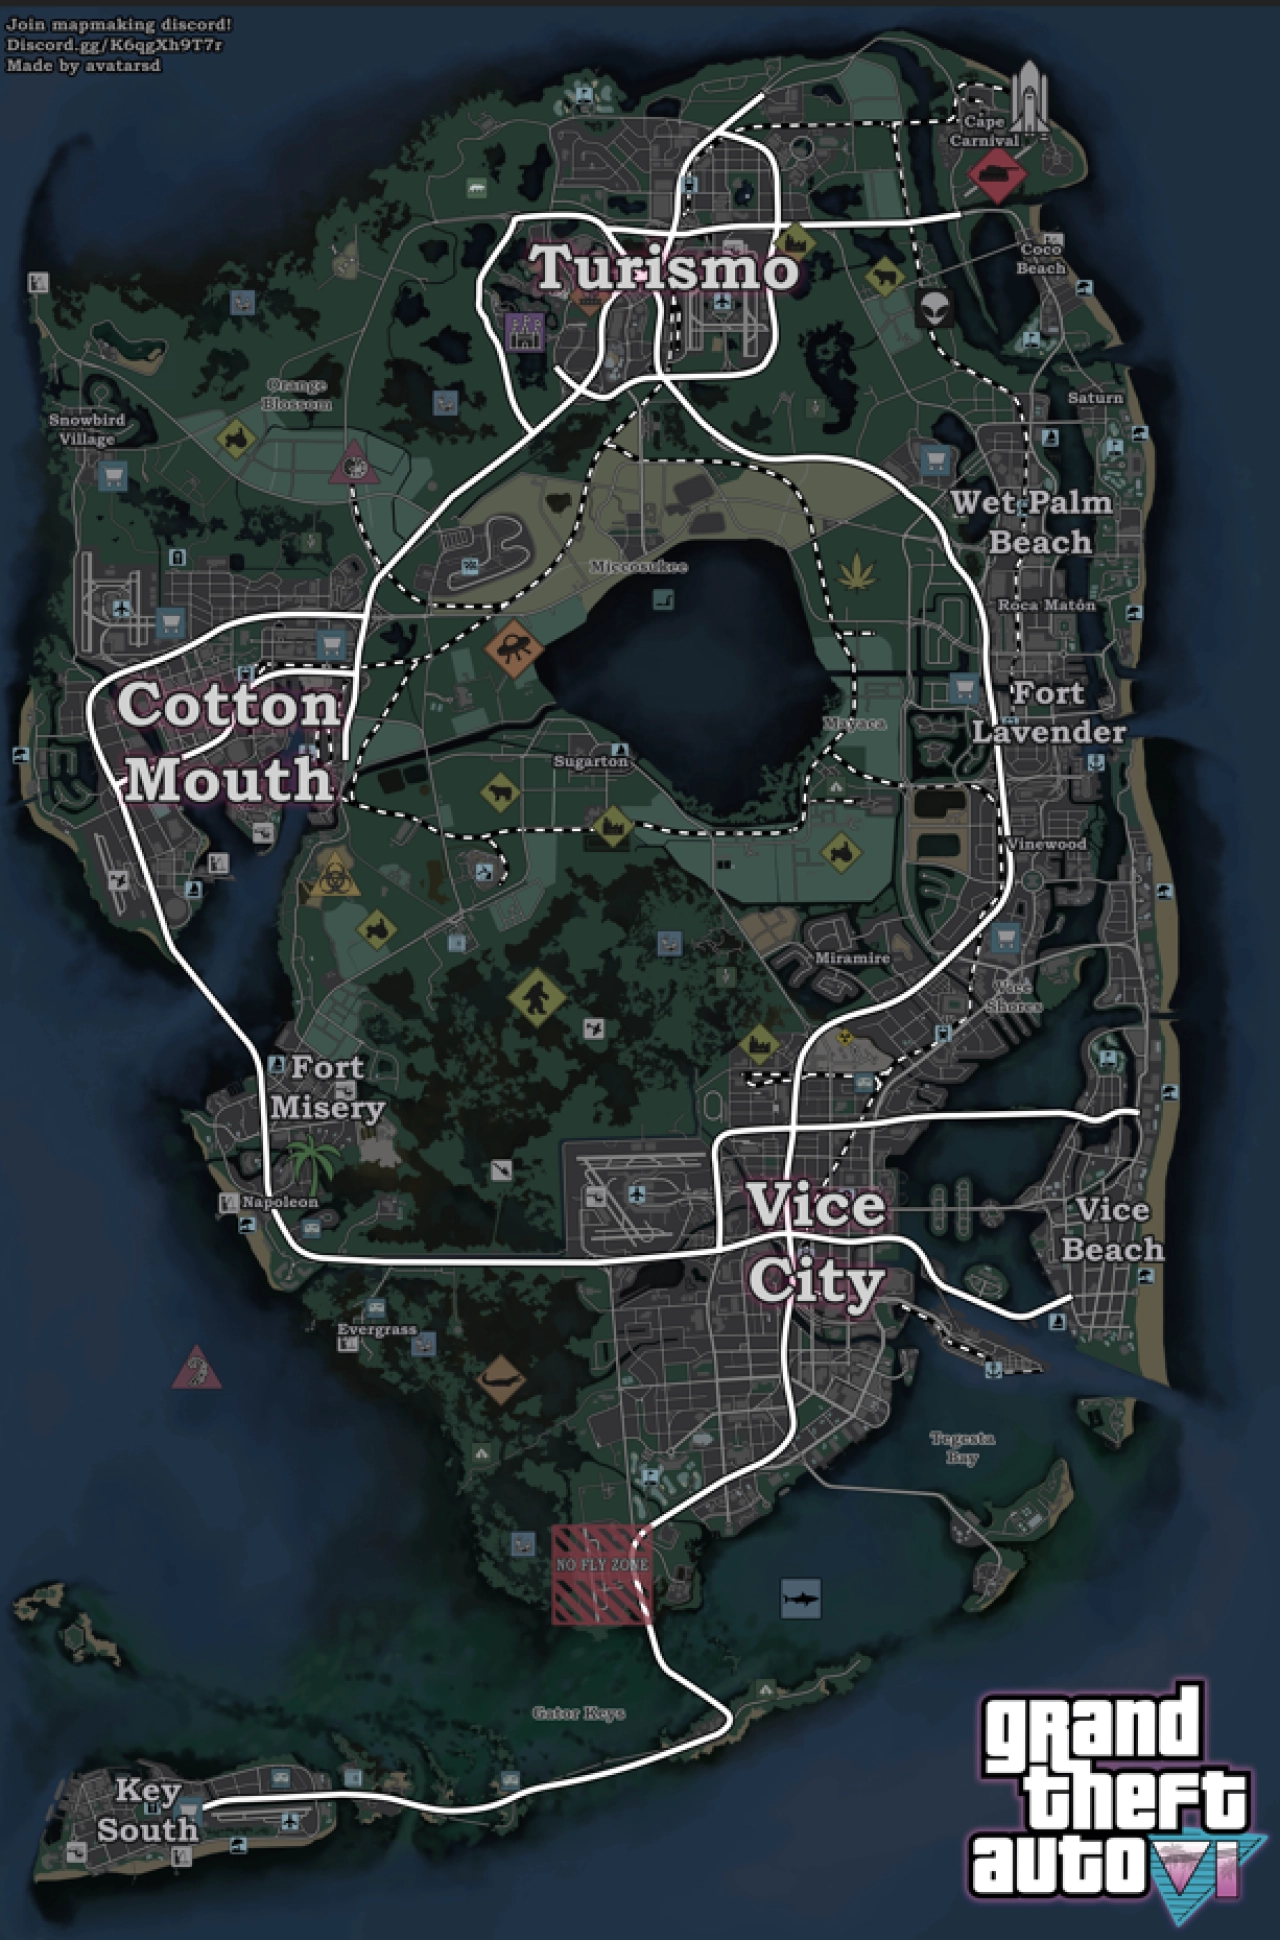 GTA VI Map Concept By avatarsd